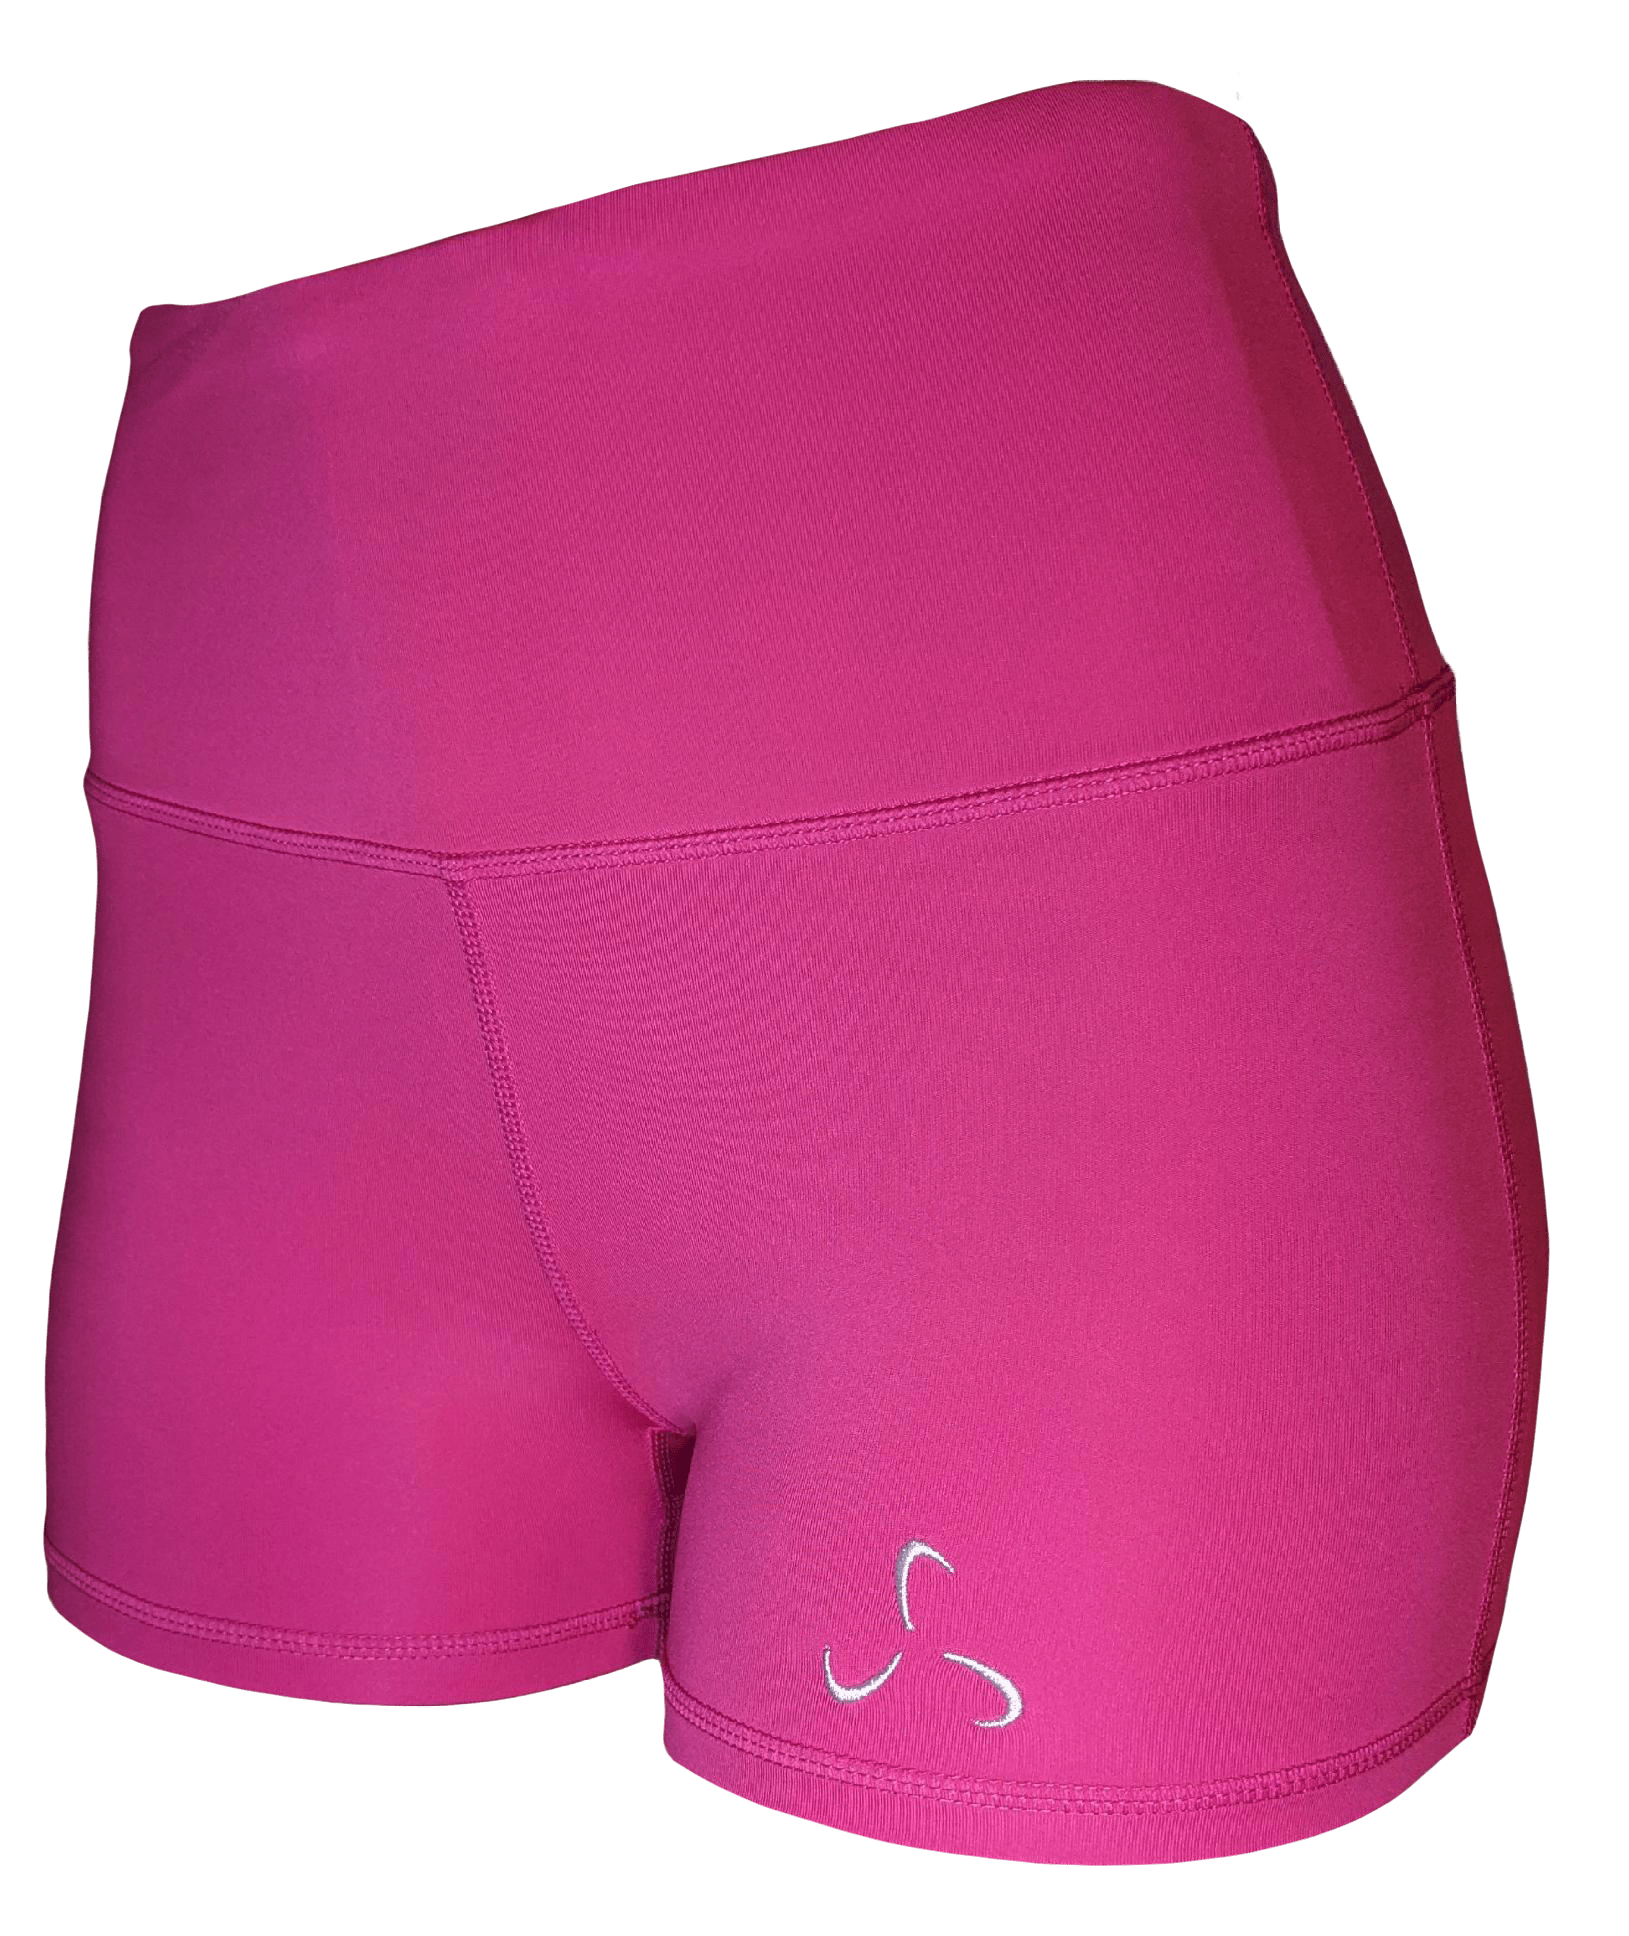 Women's Booty Shorts - VALOR FITNESS CLOTHING